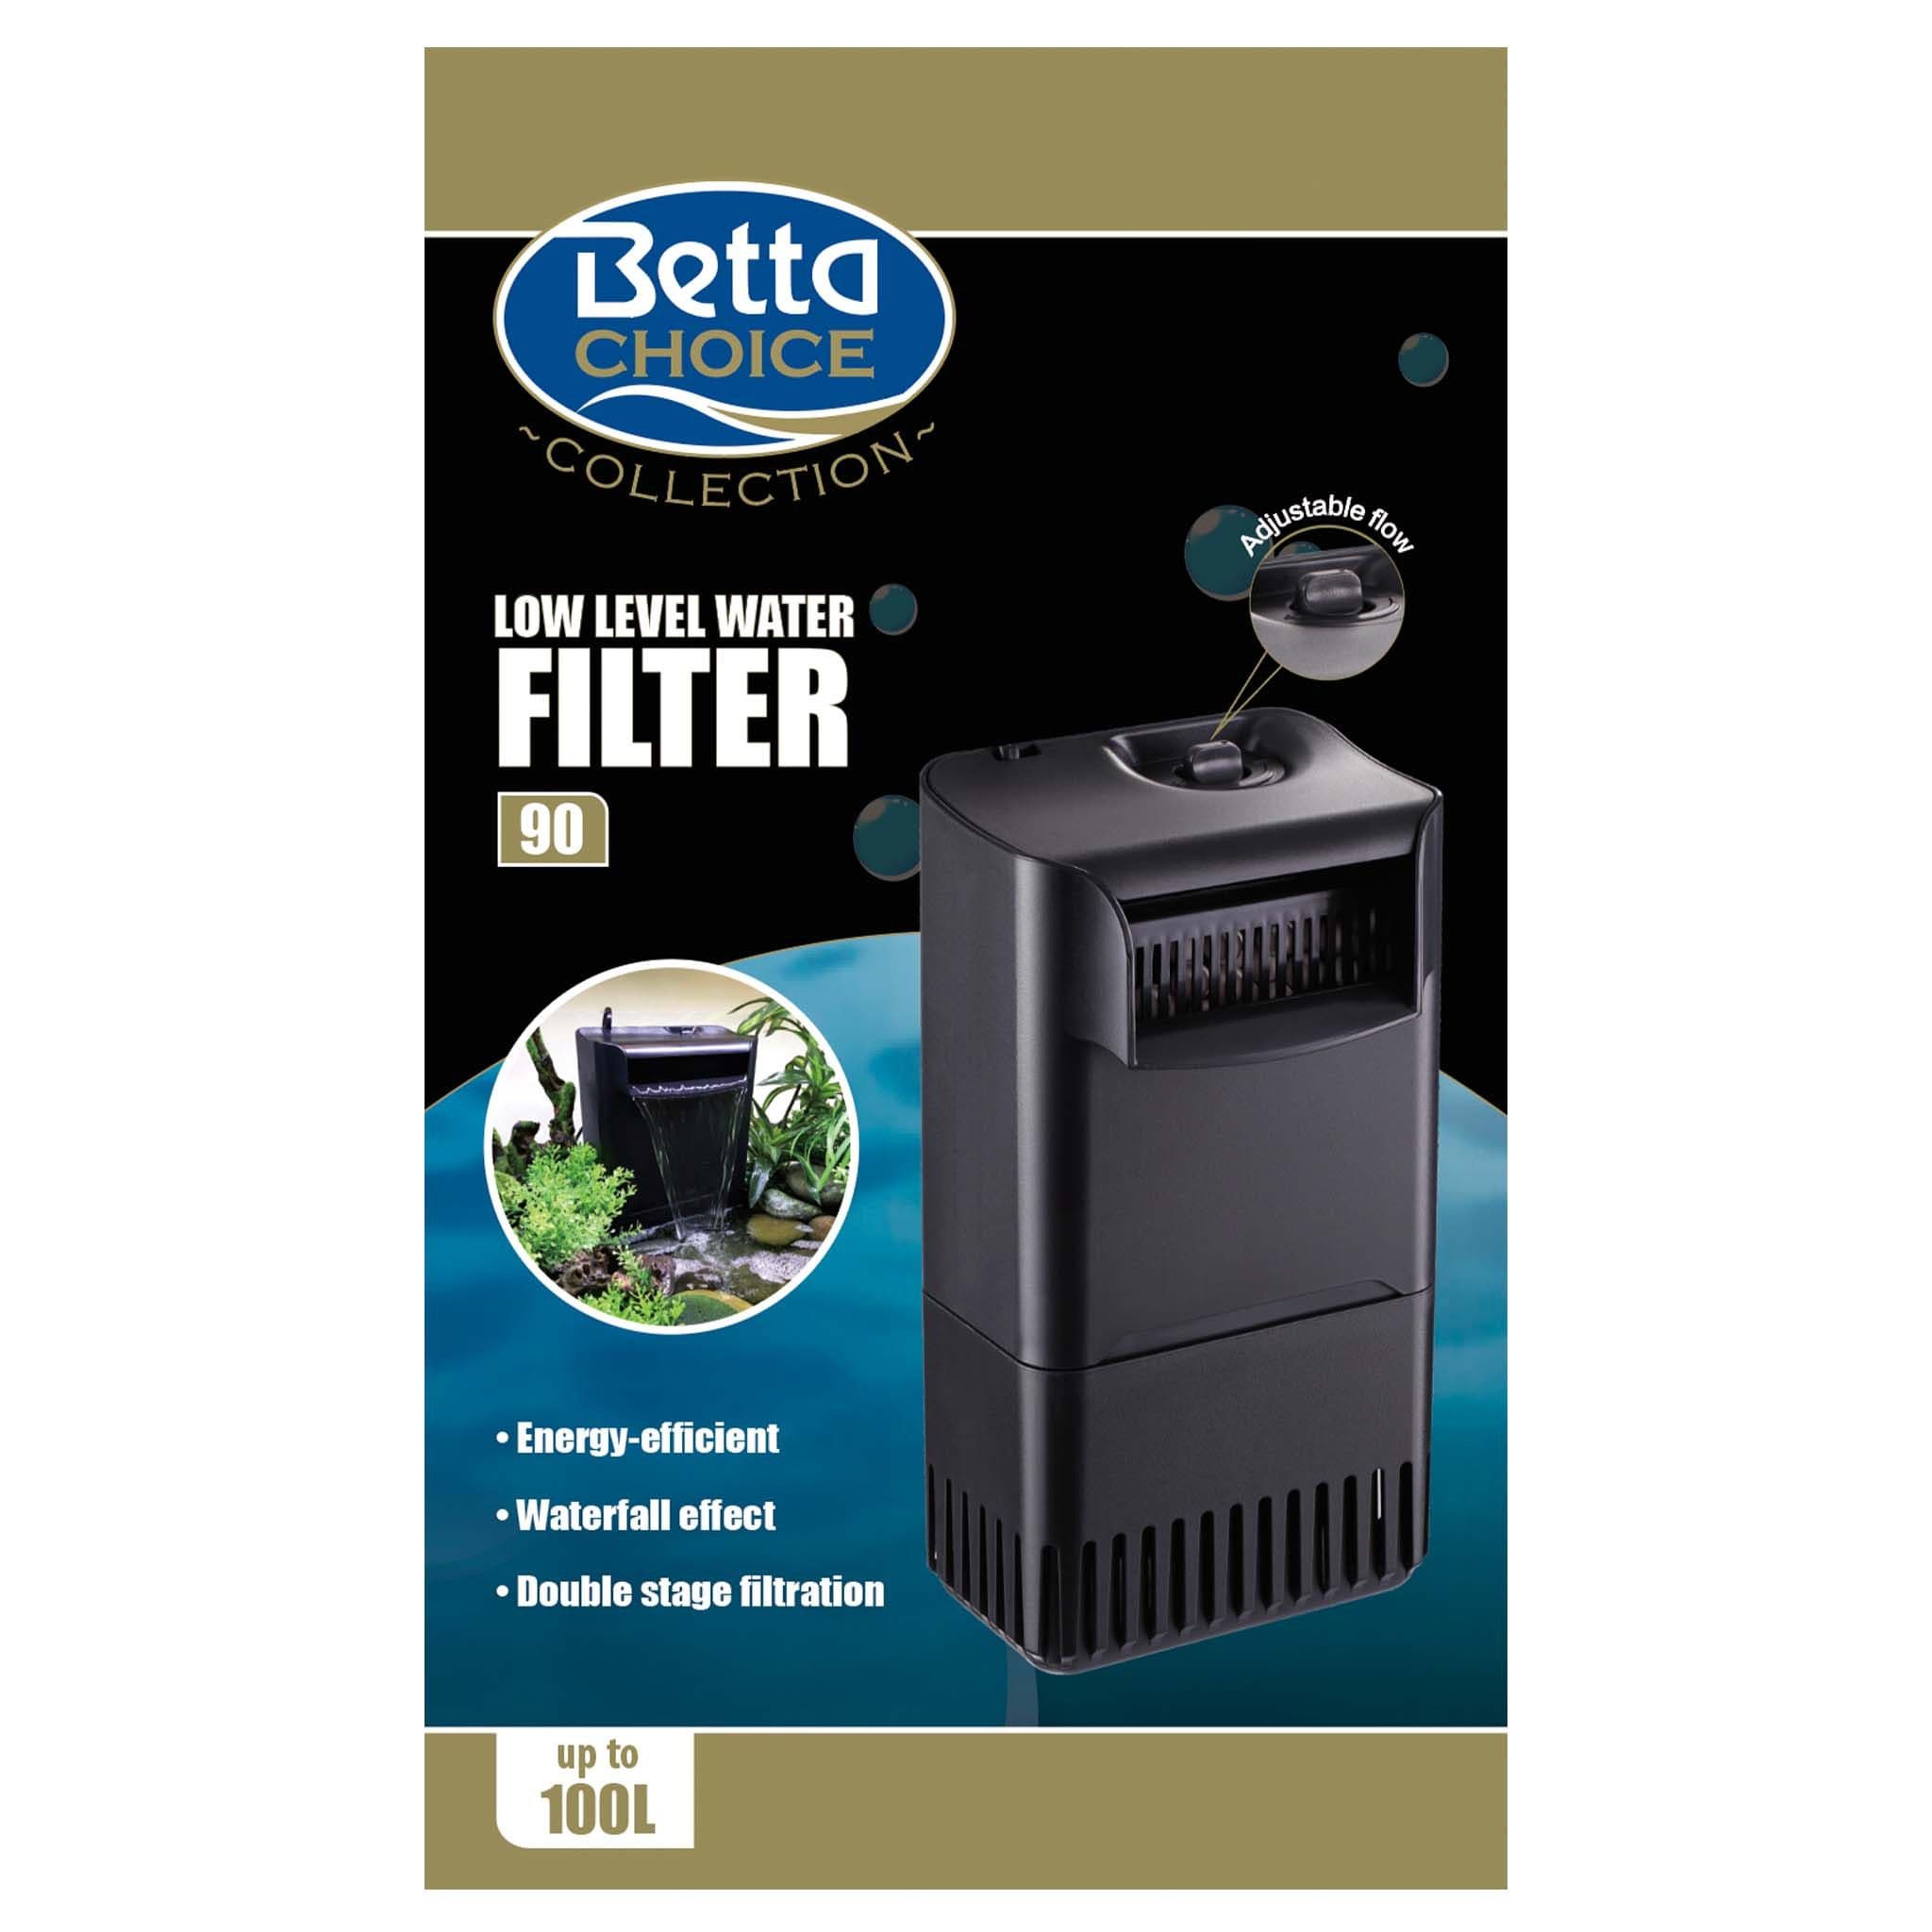 Betta Choice Low Level Water Filter 90